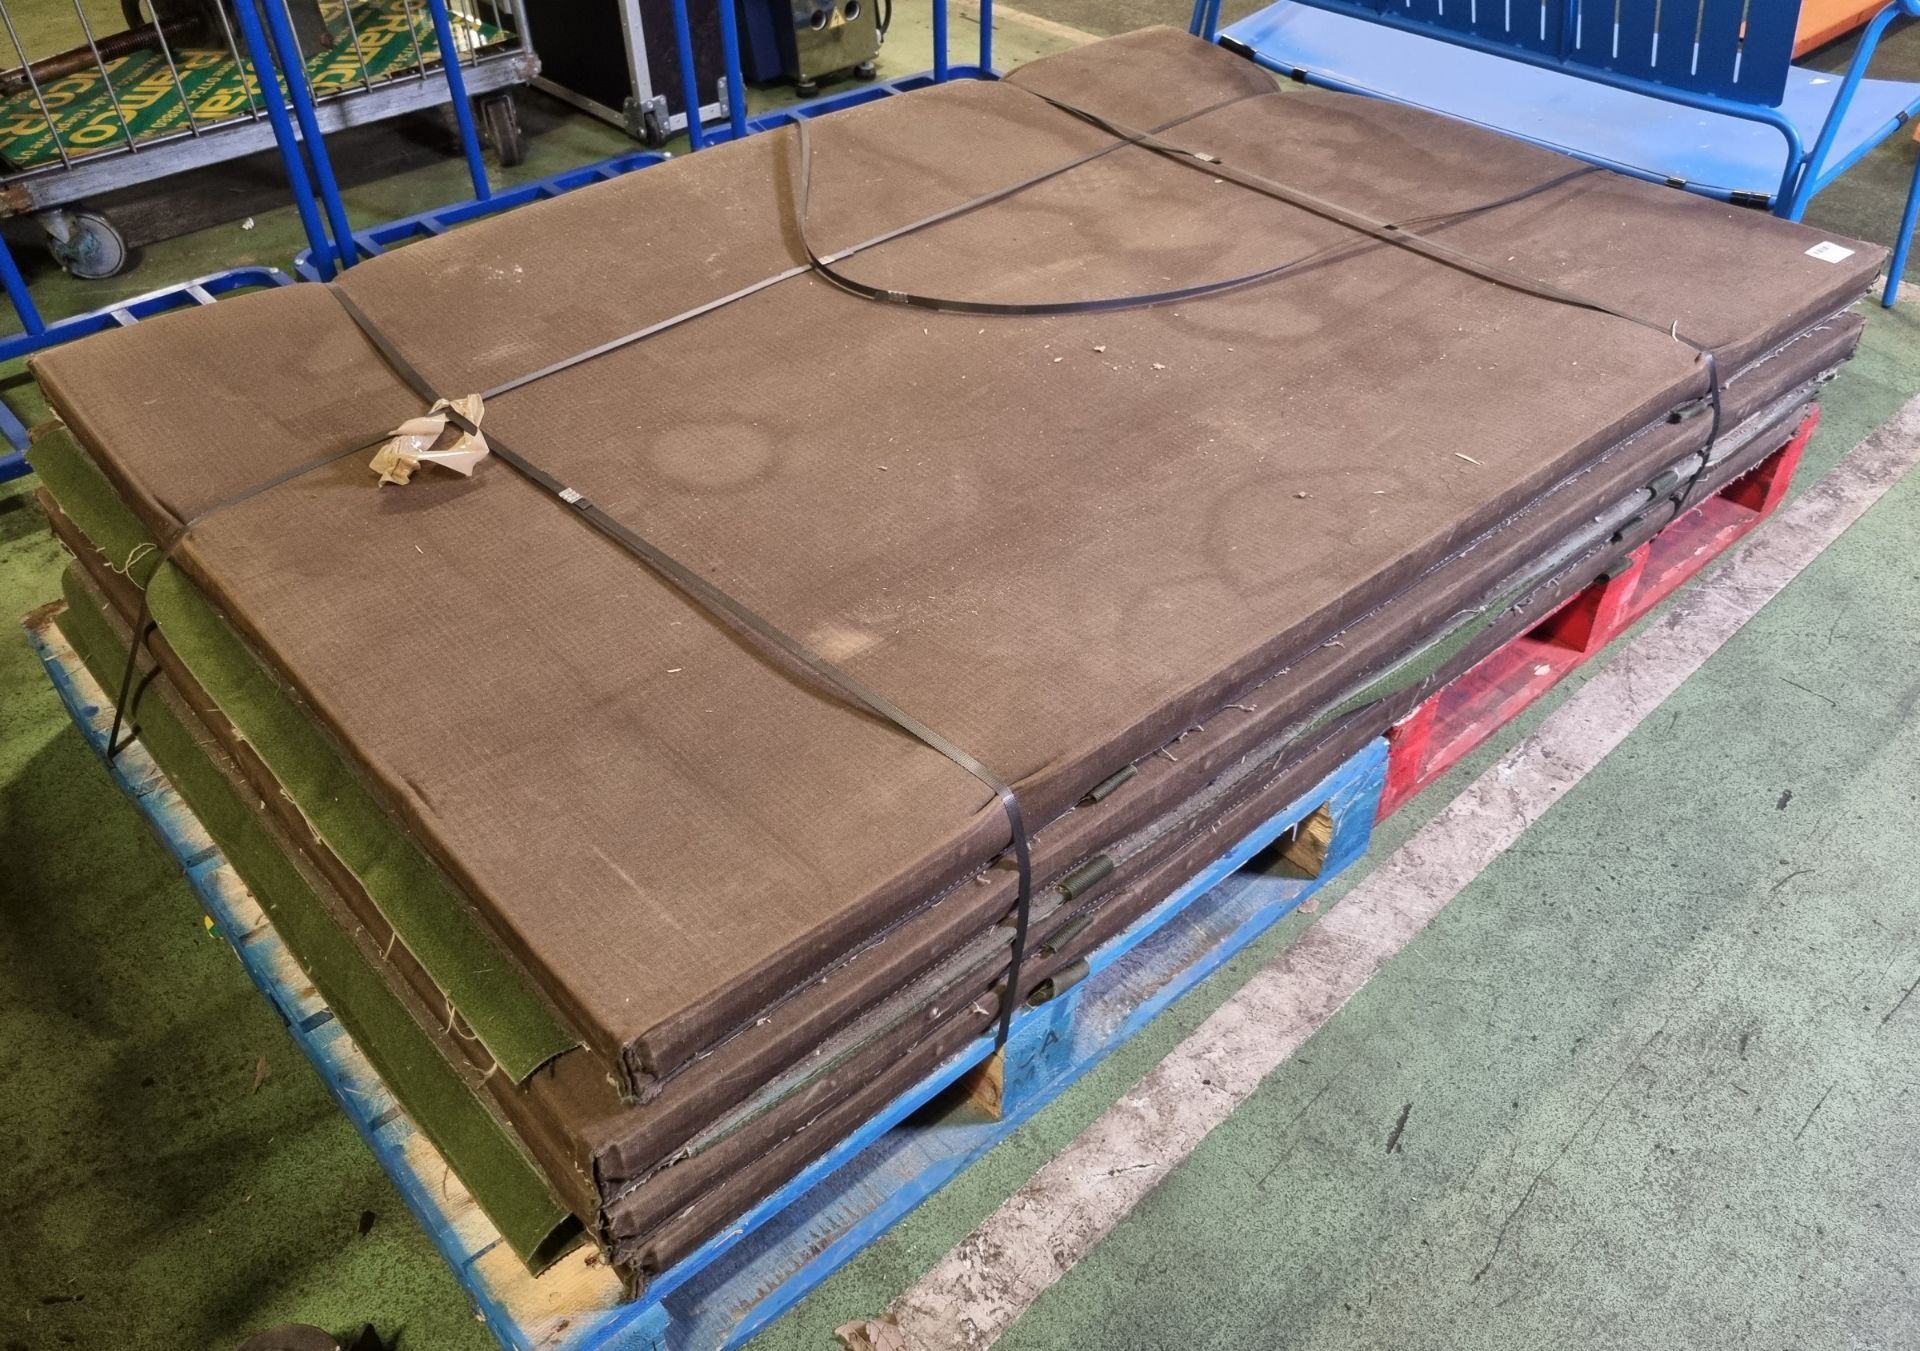 4x green gym mats - 180 x 120 x 7cm (6x4ft) - Image 3 of 3